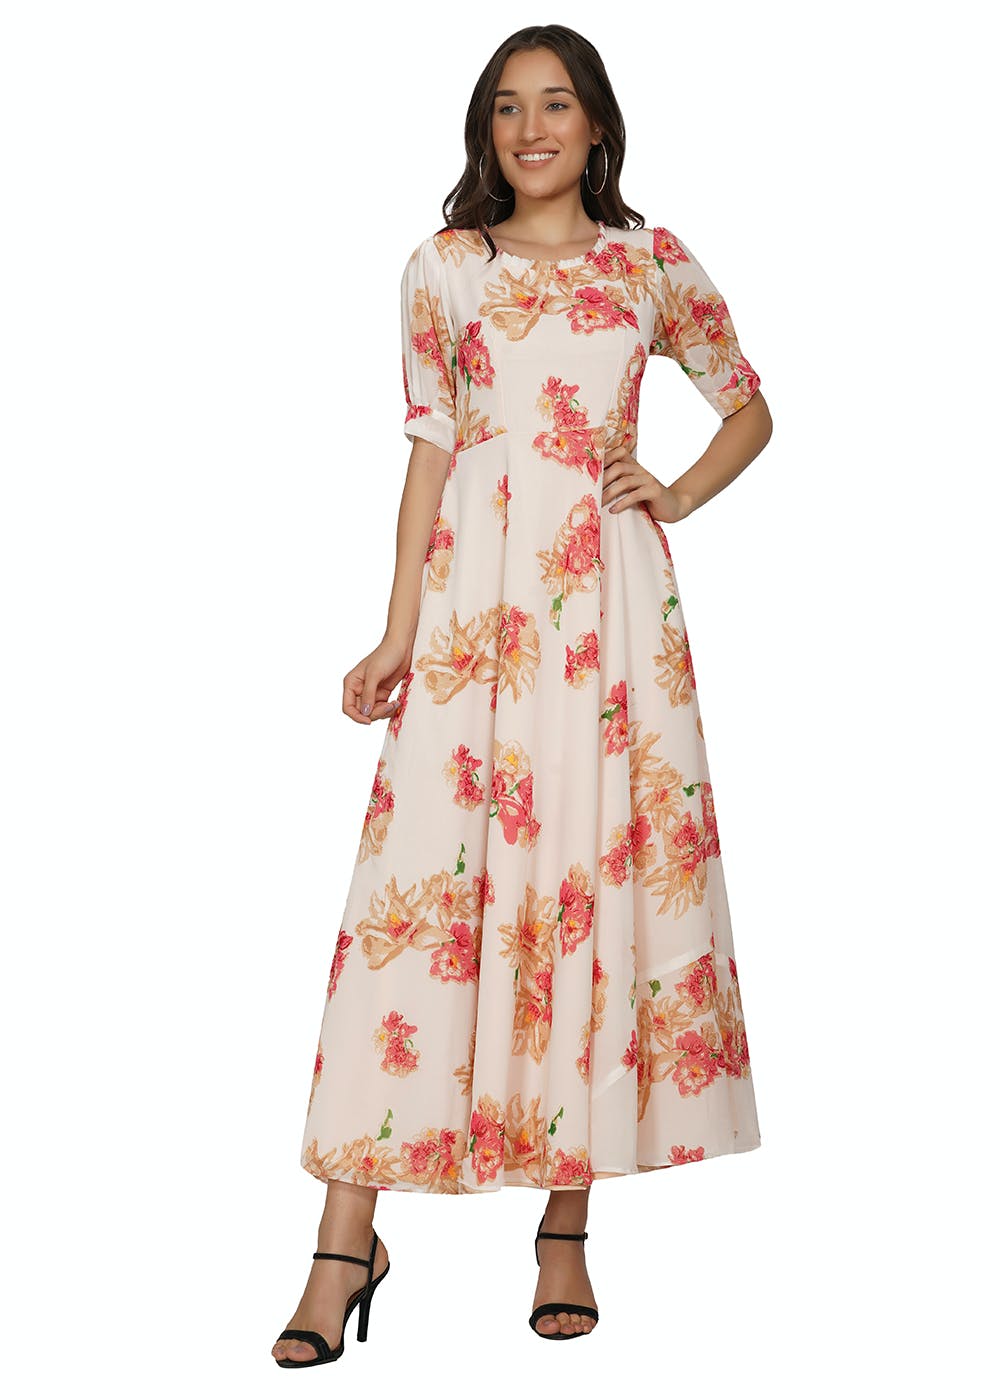 romantic floral dress - Diana Paukstyte